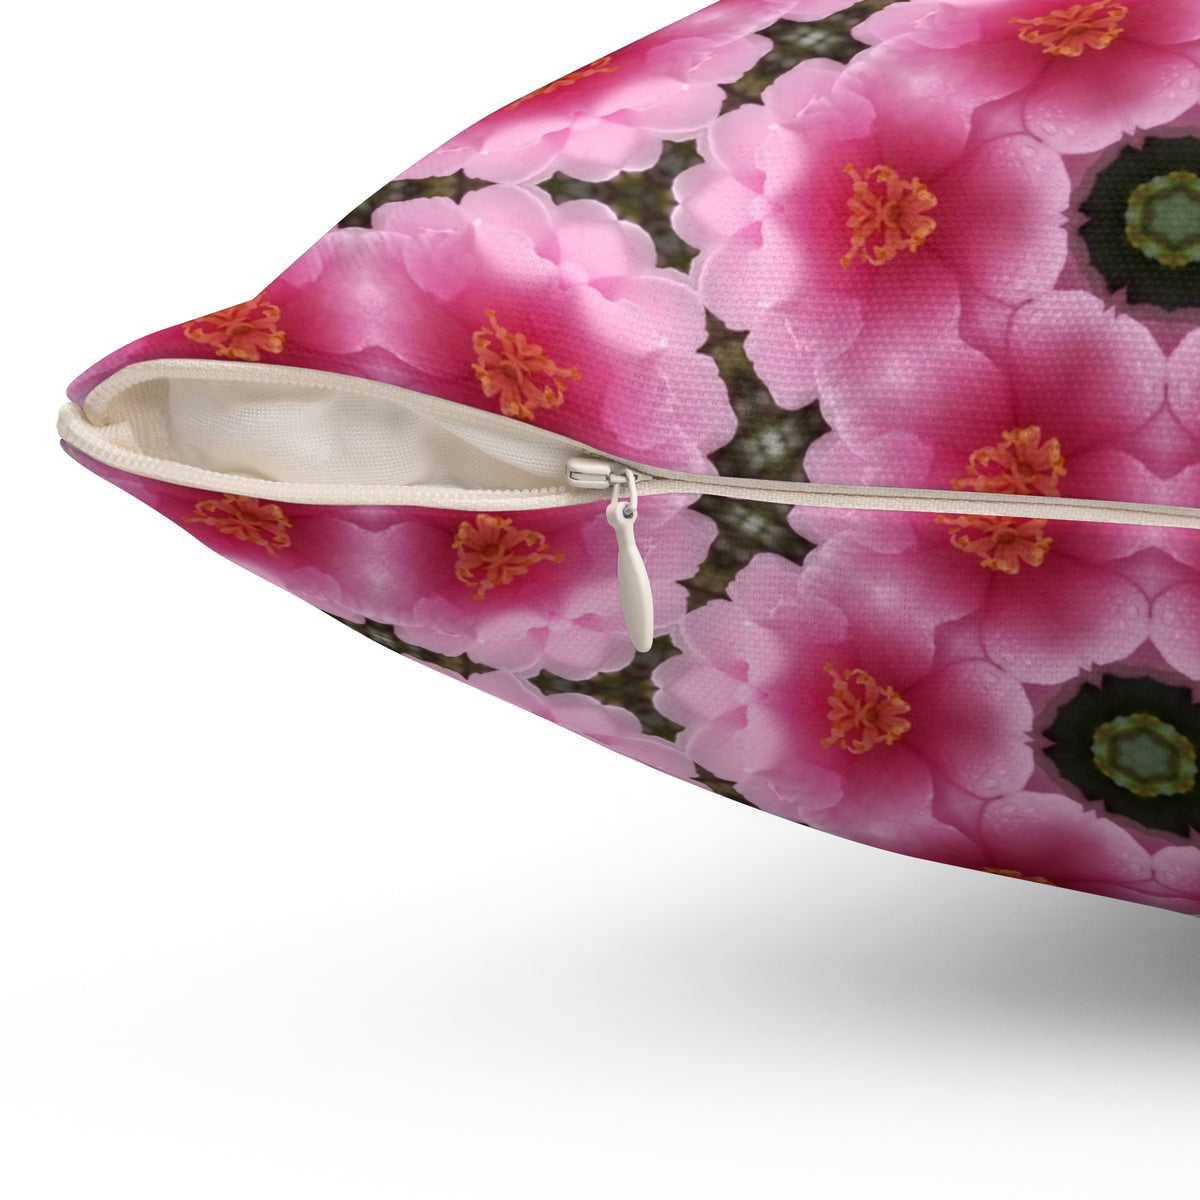 Honeycomb Pink Camellia Square Pillow - Kawaii Esquire